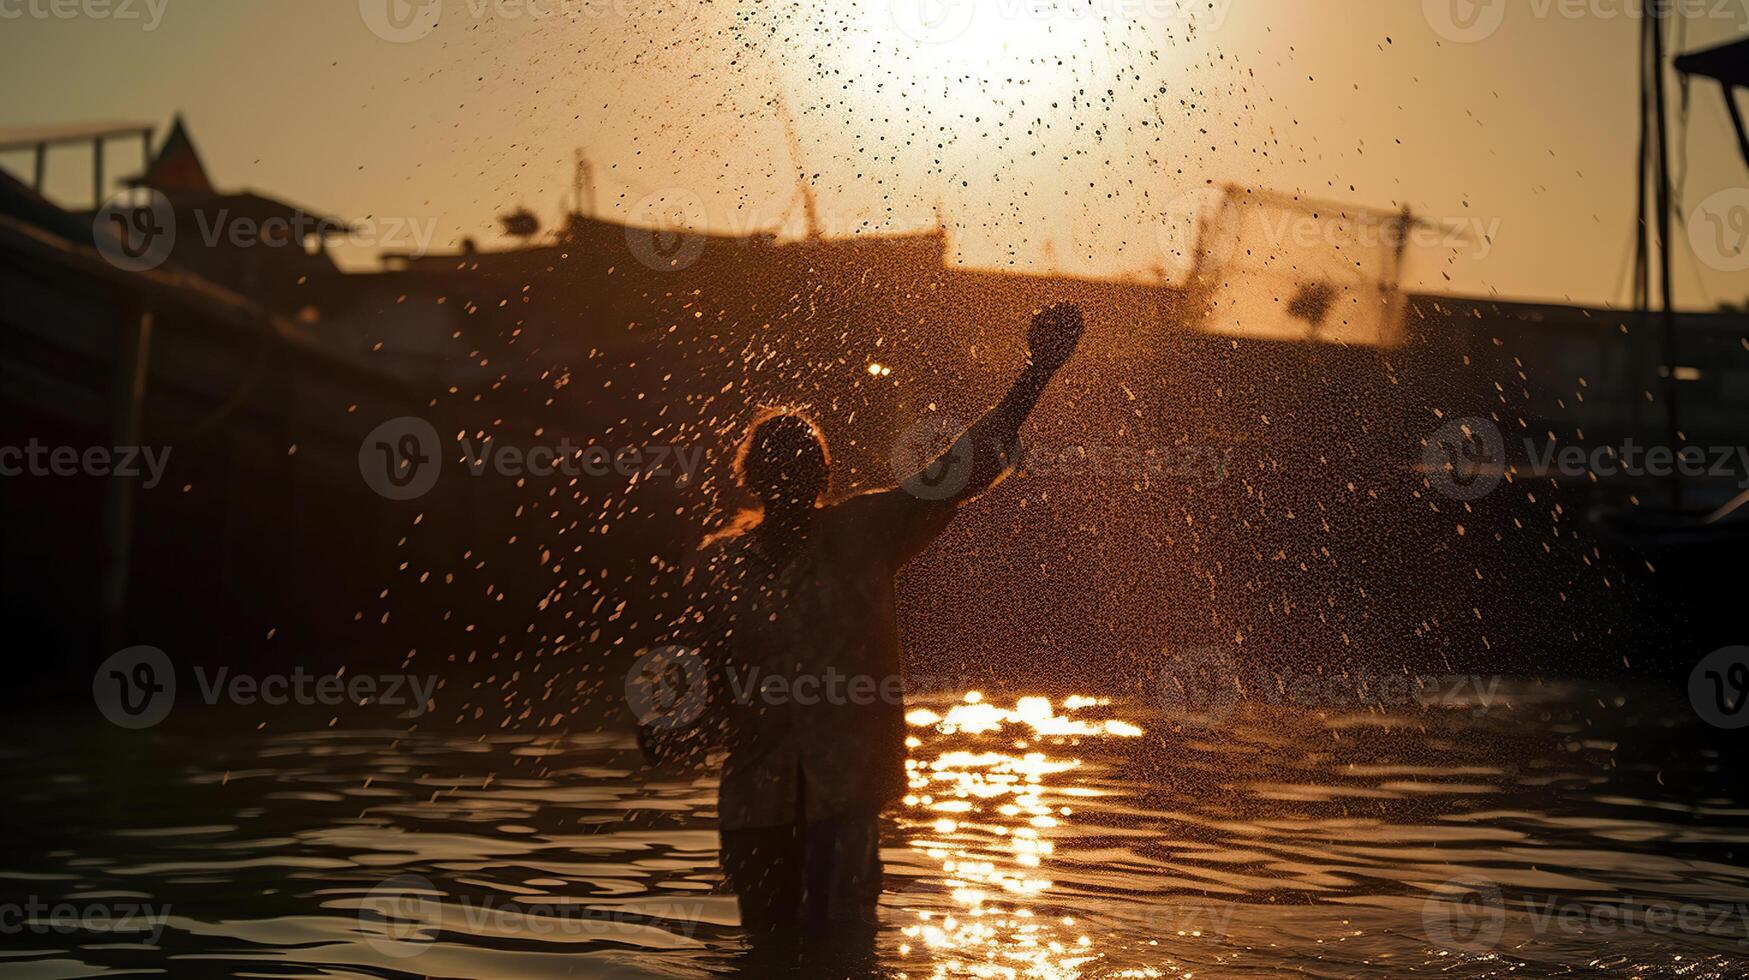 Fishermen Fishing With Nets When The Sun Shines Stock Photo